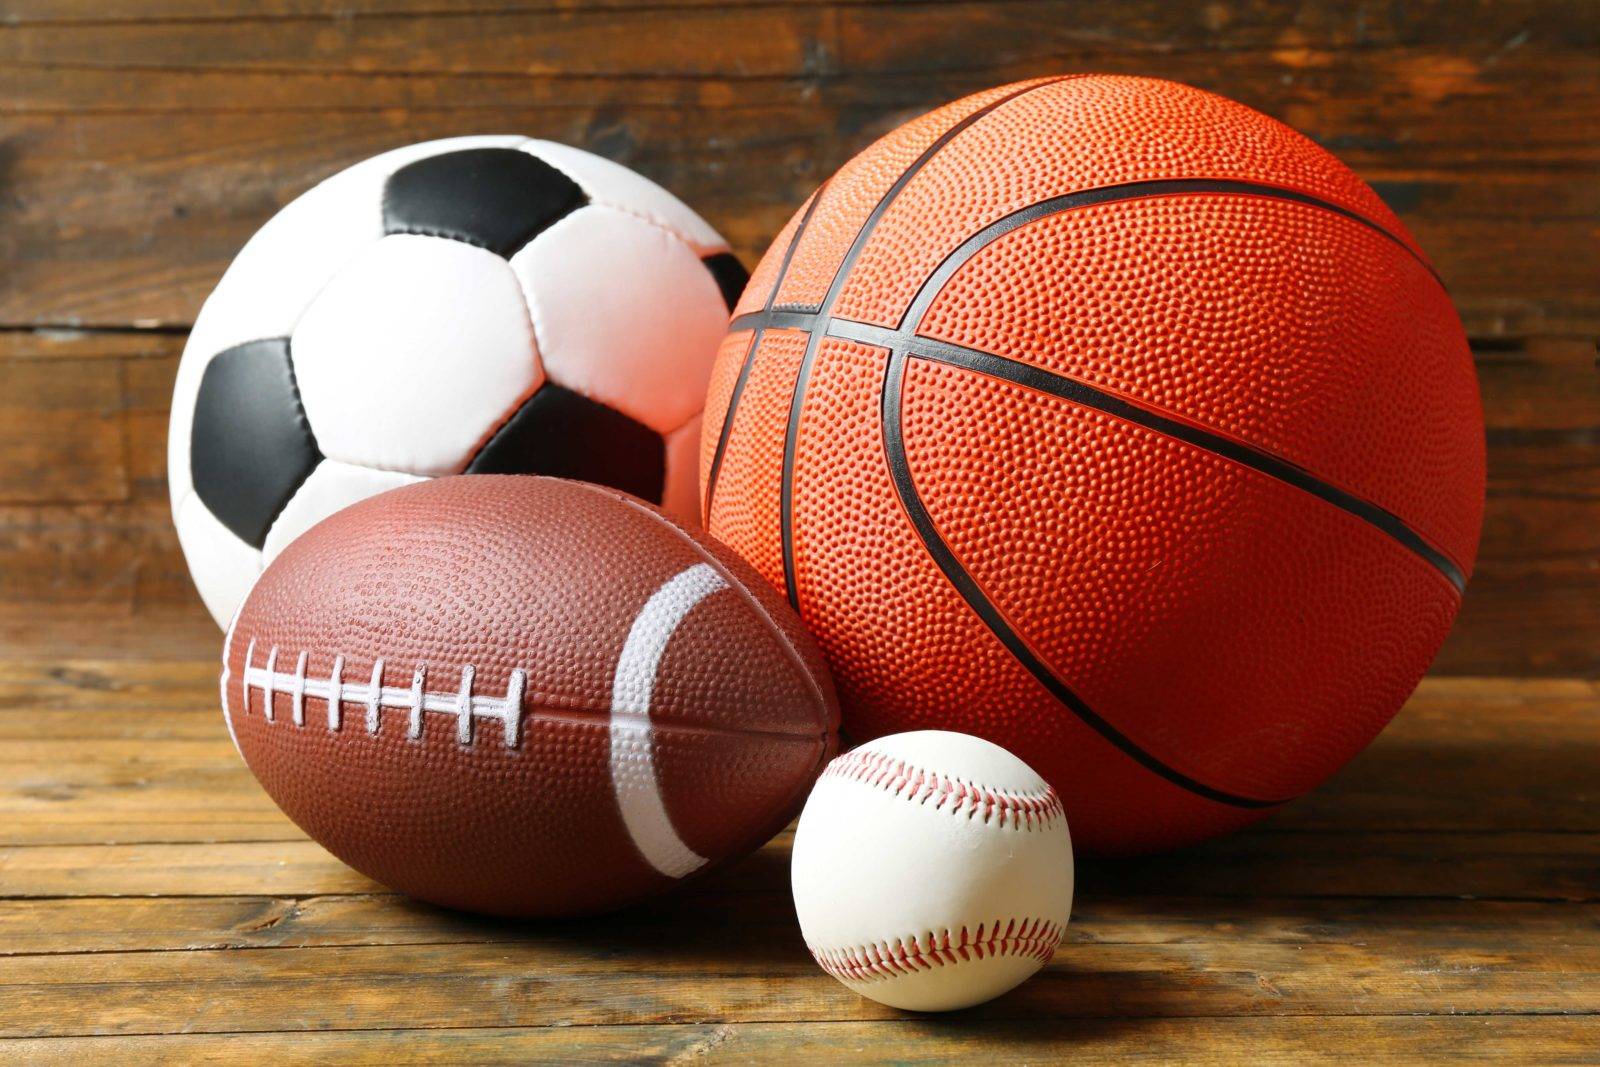 Football, Soccer, Basketball & Tennis Balls